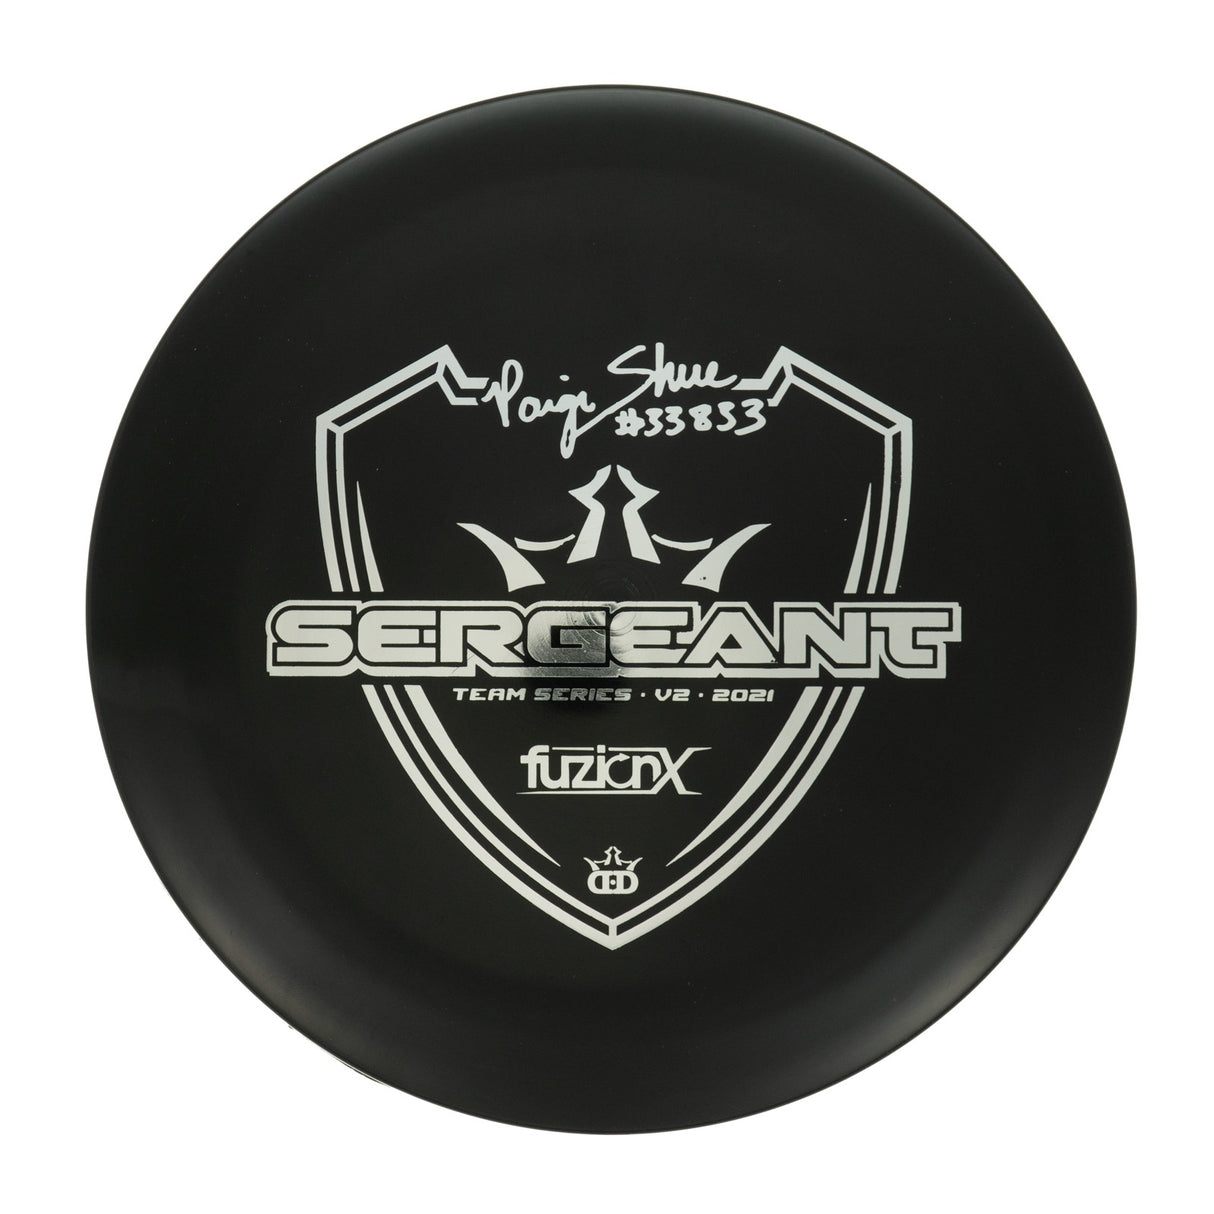 Dynamic Discs Sergeant - Paige Shue 2021 Team Series V2 Fuzion-X 177g | Style 0002